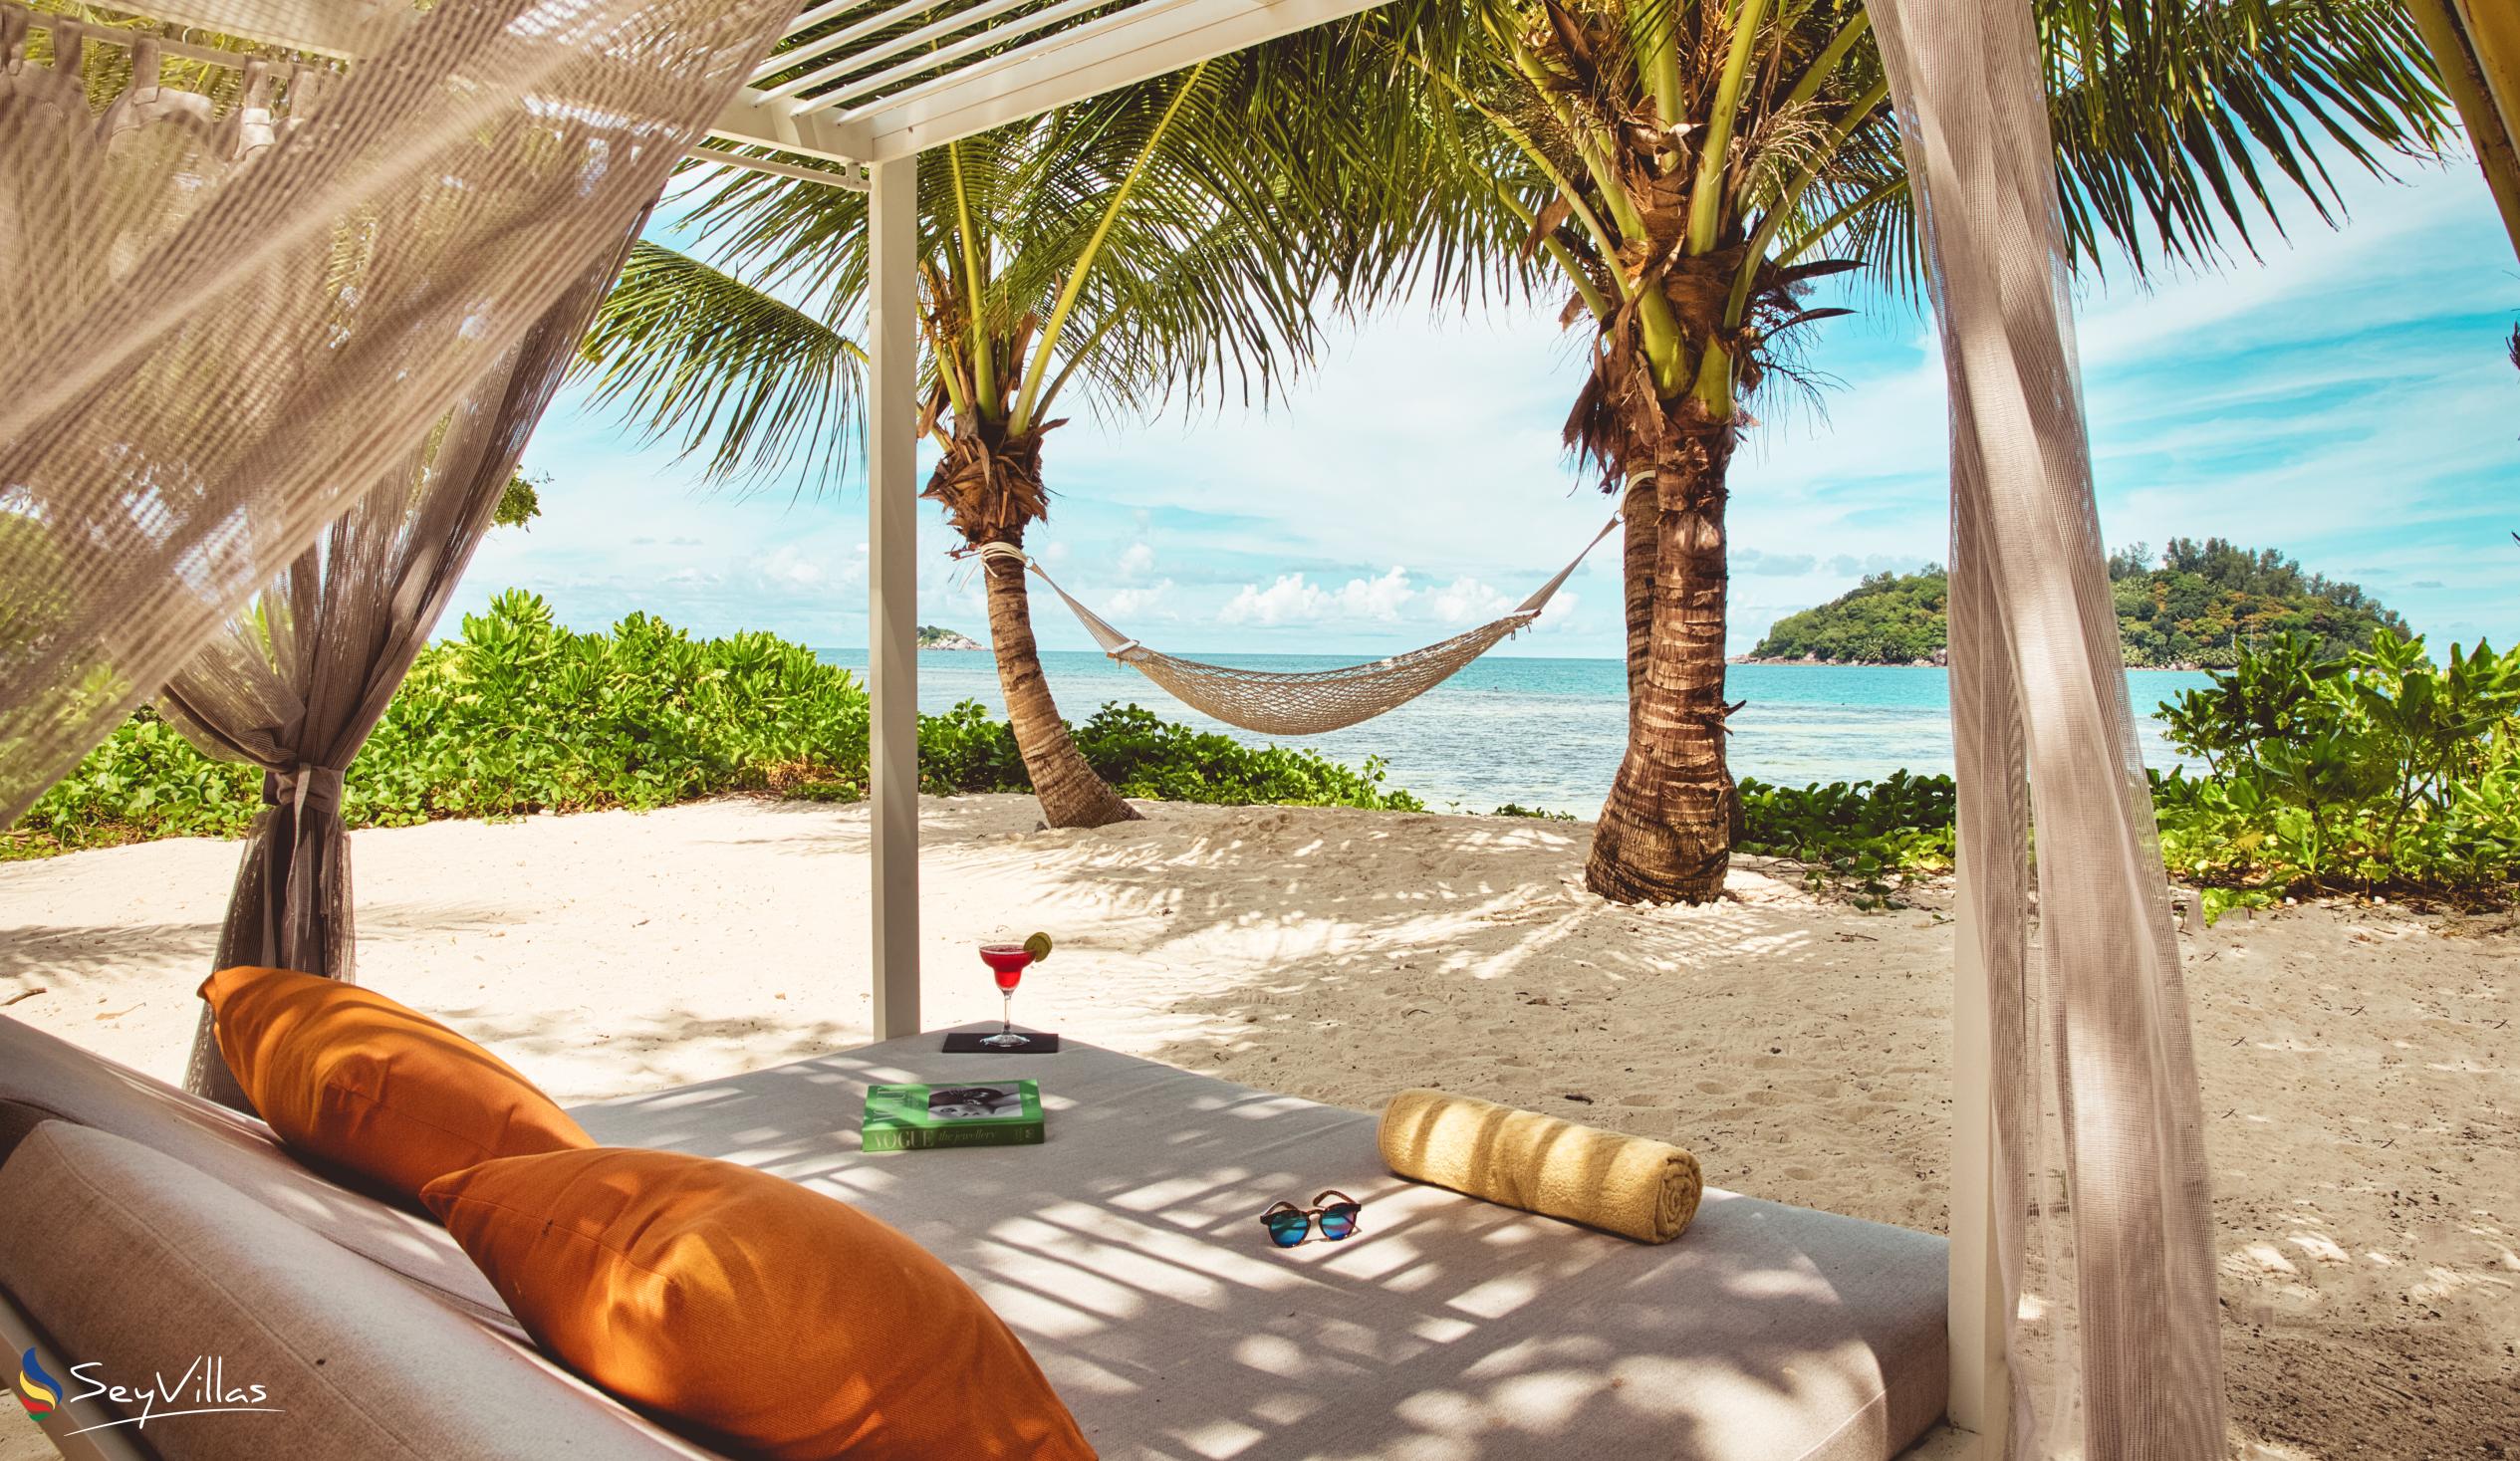 Photo 38: Club Med Seychelles - Location - Saint Anne (Seychelles)